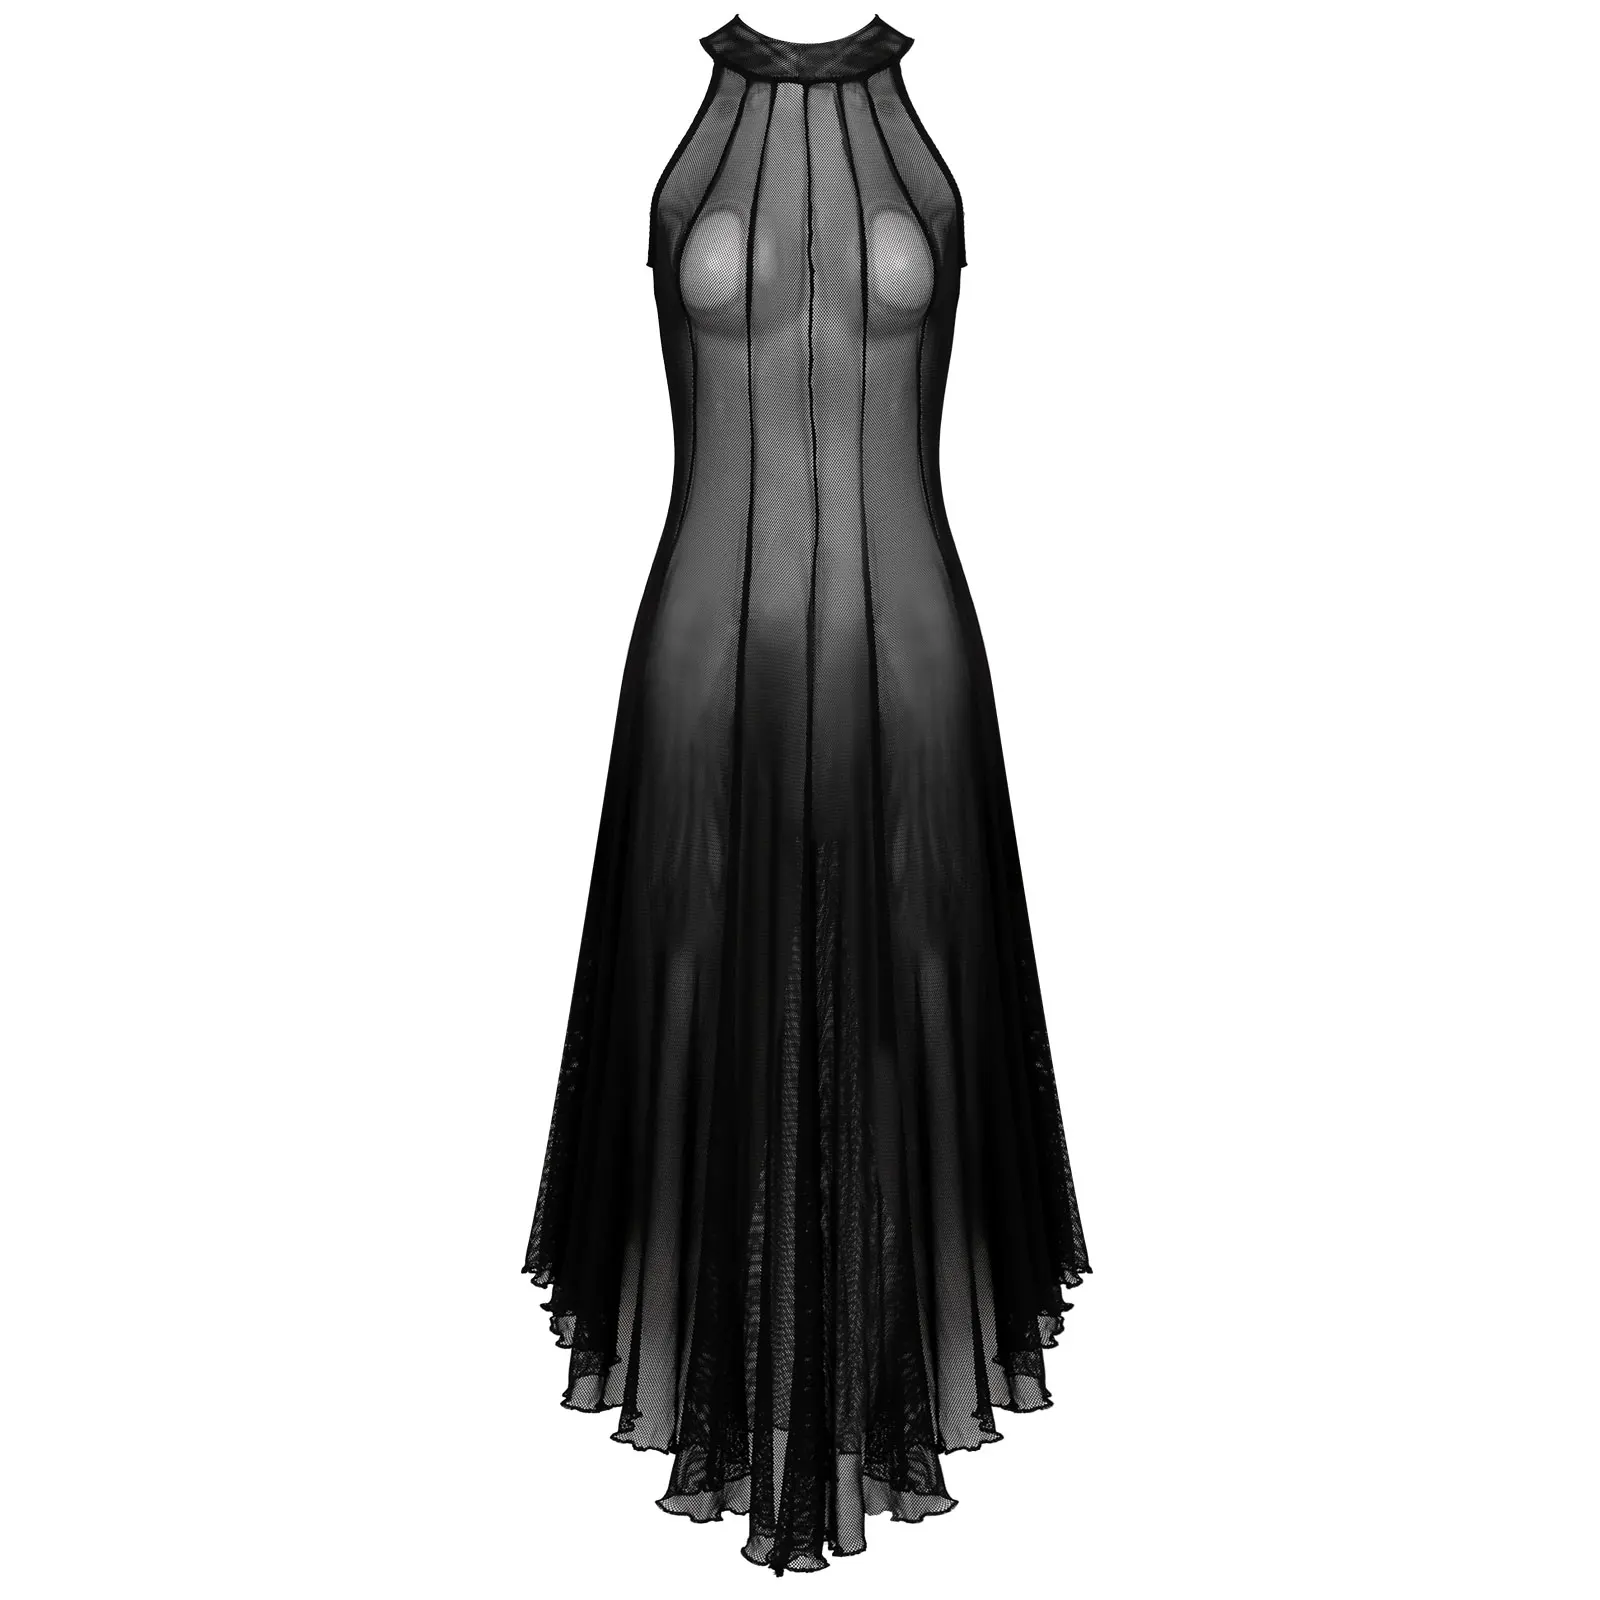 Womens Black Color Gothic See-through Mesh Dress Punk Mock Neck Sleeveless Dresses for Halloween Rock Concert